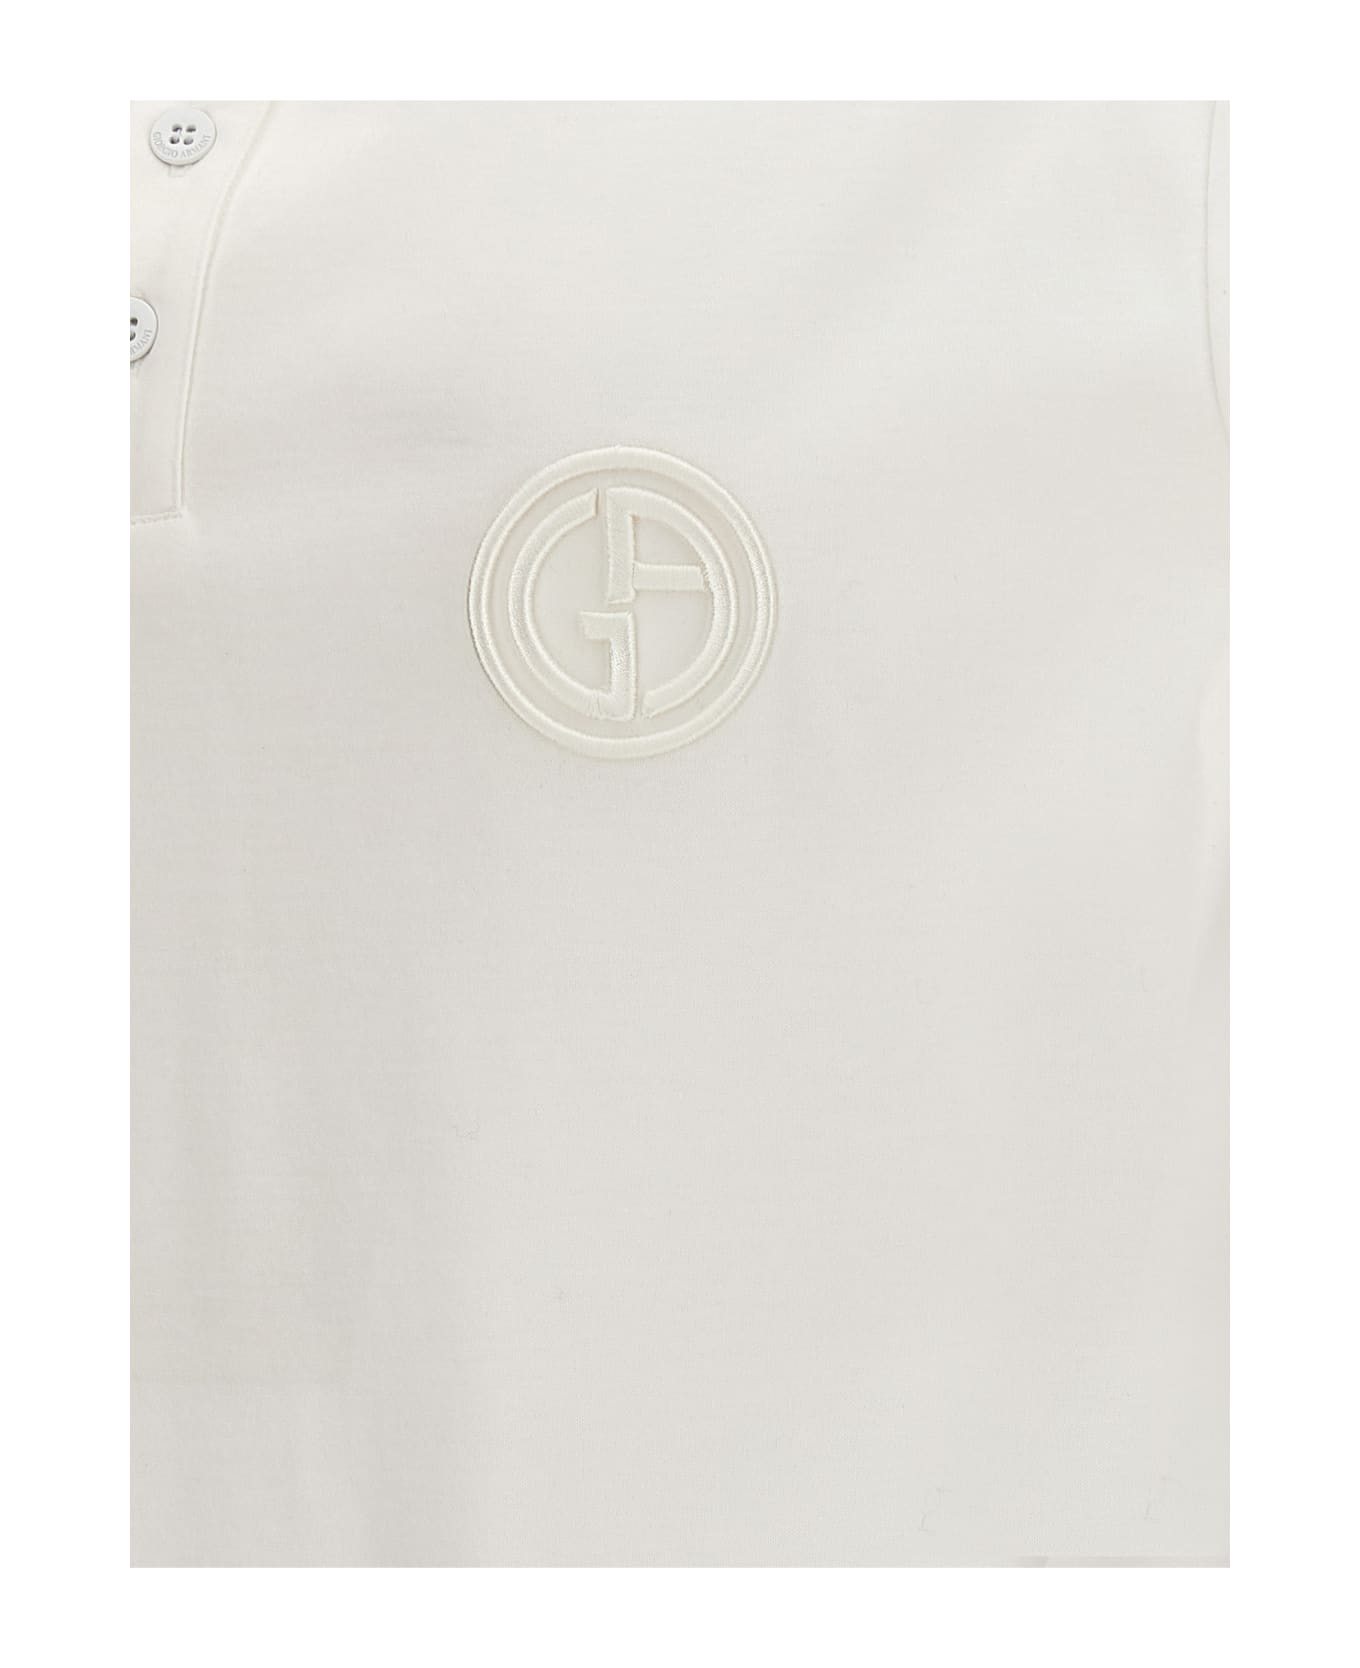 Giorgio Armani Logo Embroidery Polo Shirt - White